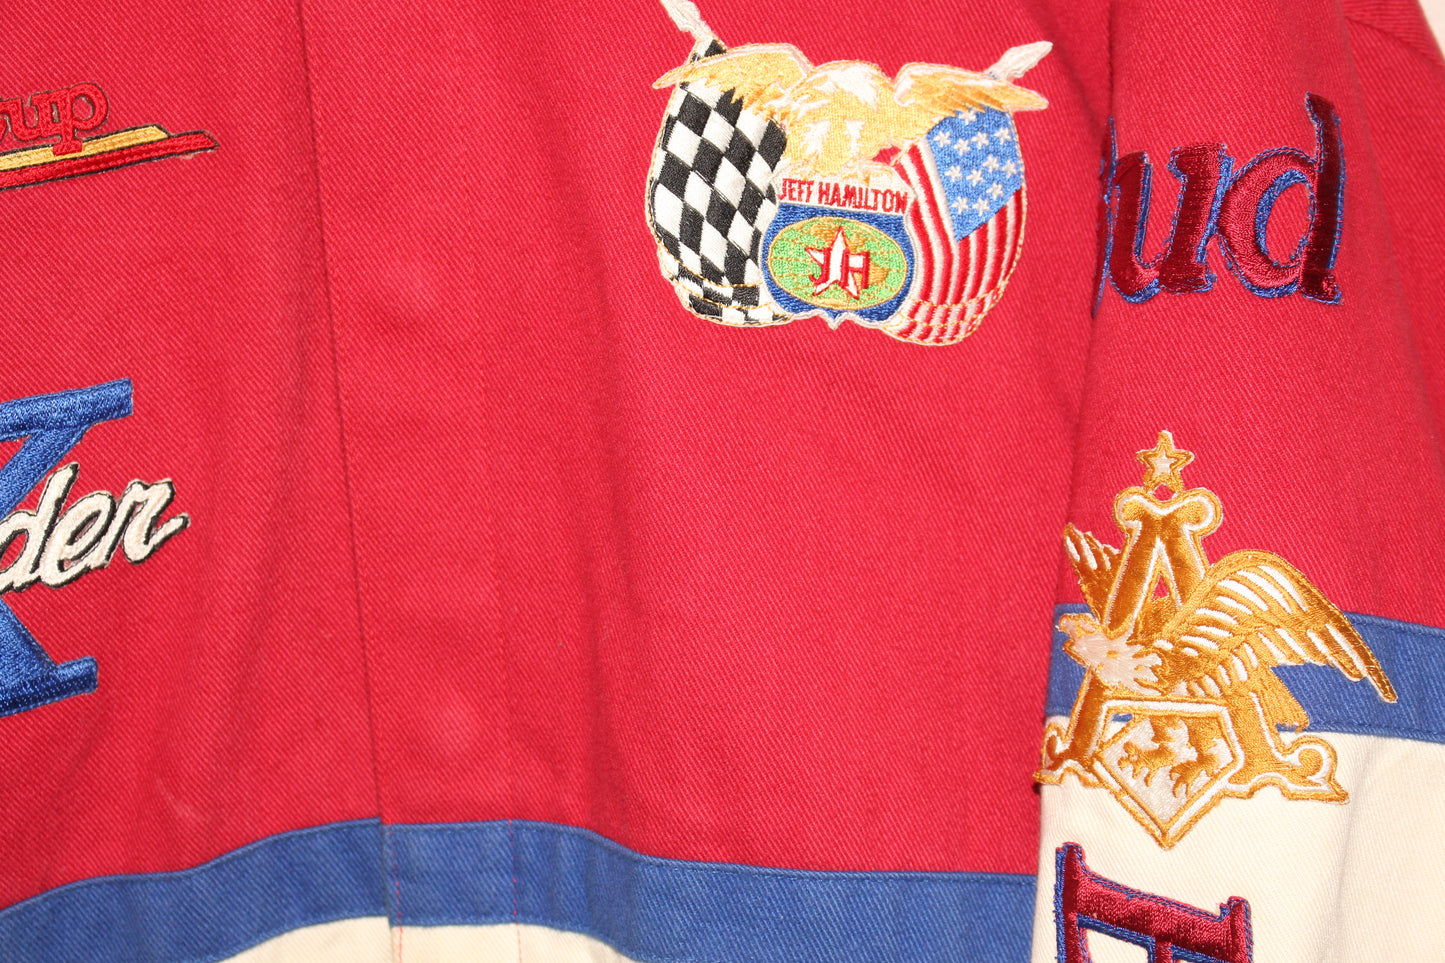 Rare Budweiser Racing NASCAR Ken Schrader #25 Jeff Hamilton Jacket (XL)